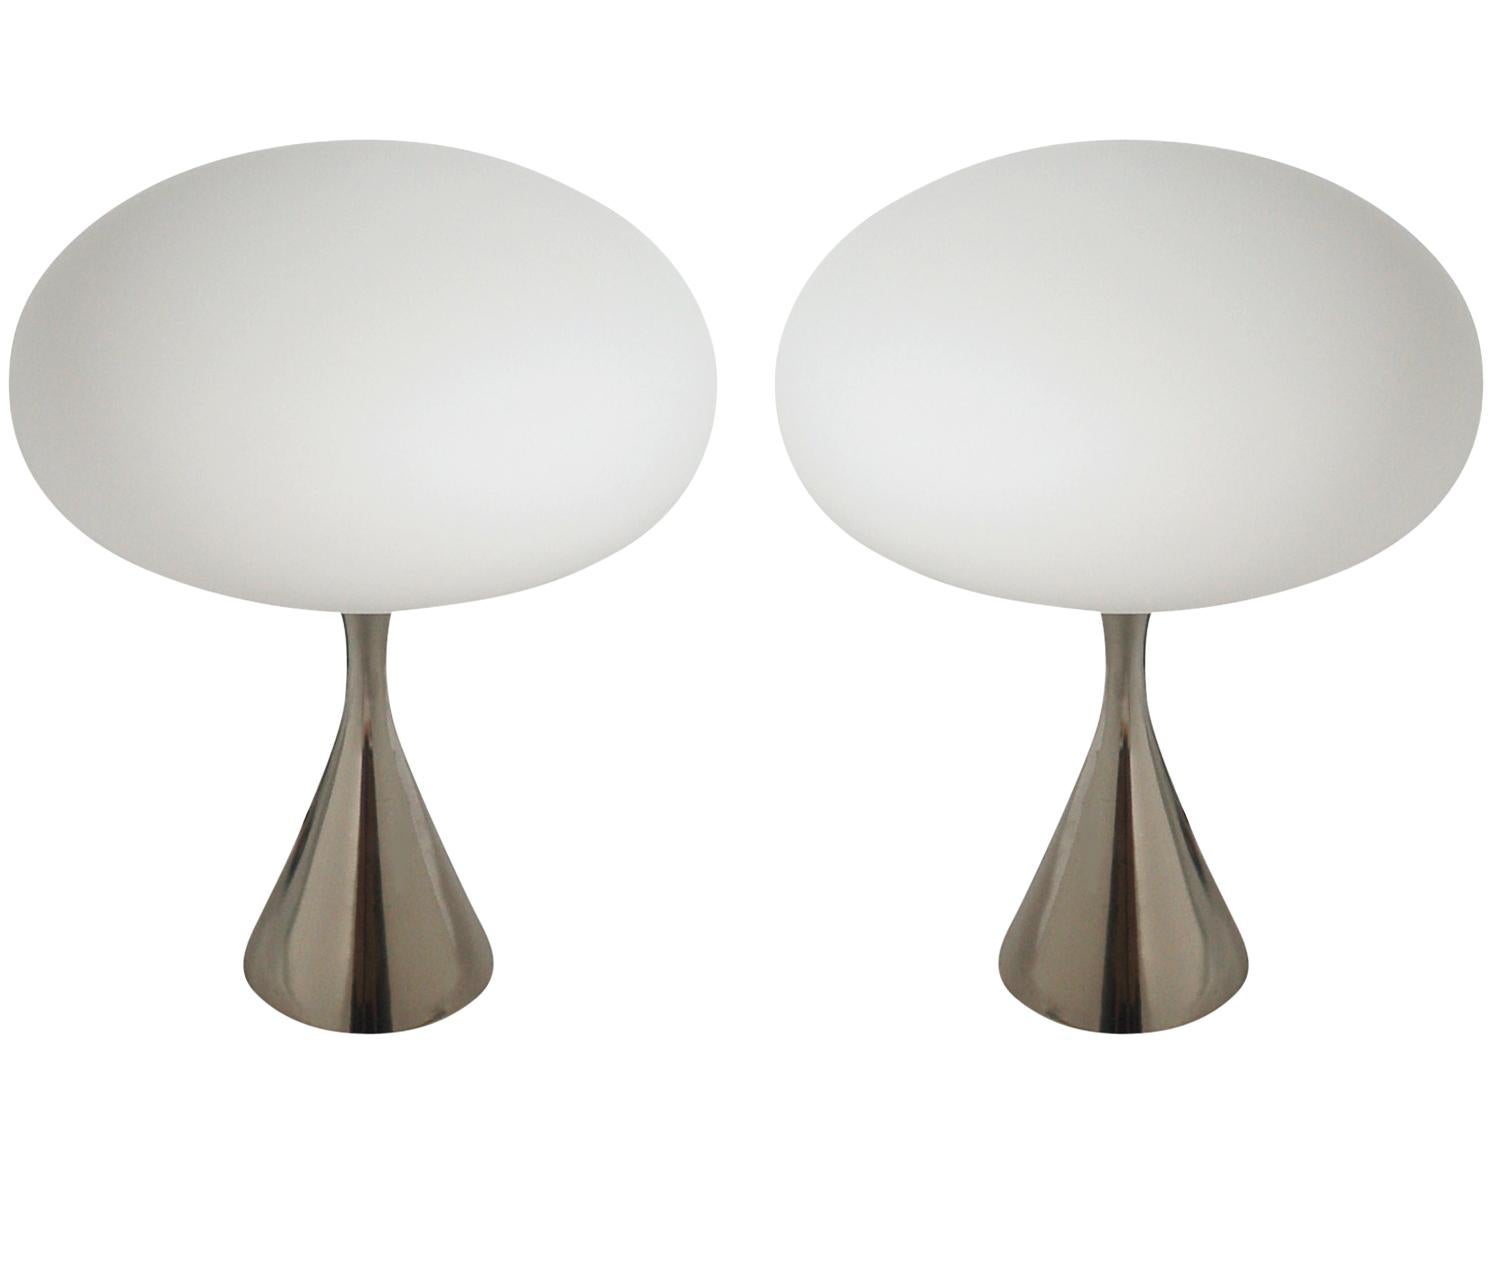 Pair of Mid-Century Modern Laurel Mushroom Table Lamps in Chrome / Silver 1